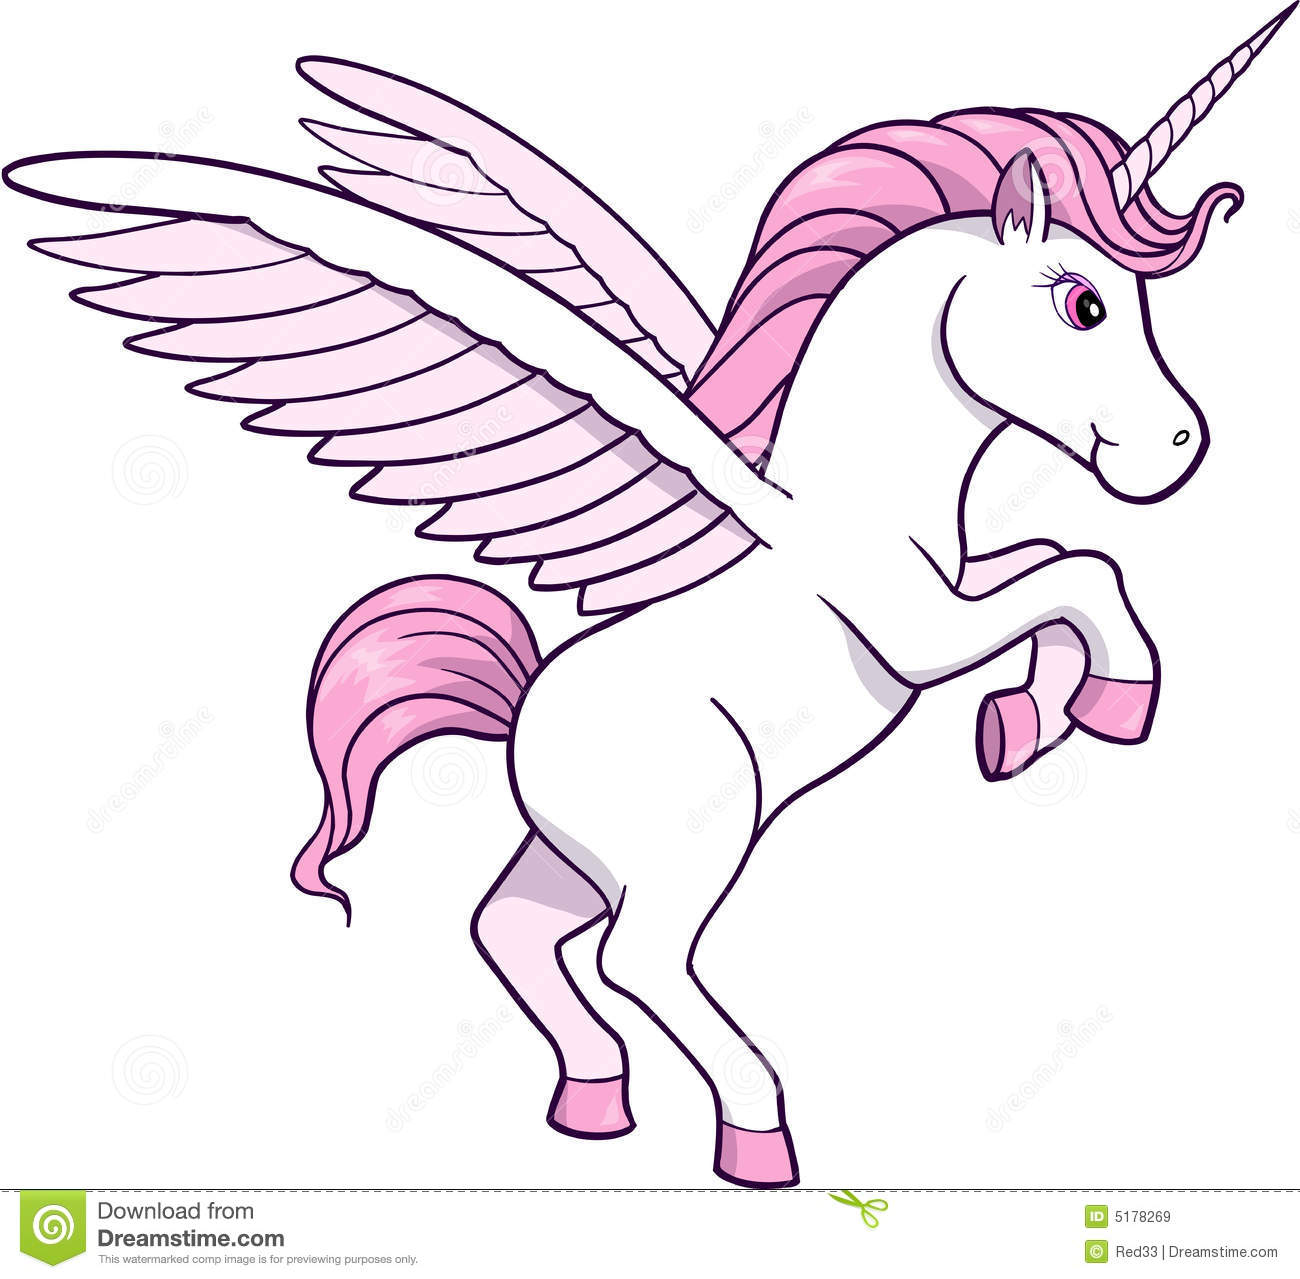 Unicorn Vector Illustration Royalty Free Stock Images   Image  5178269